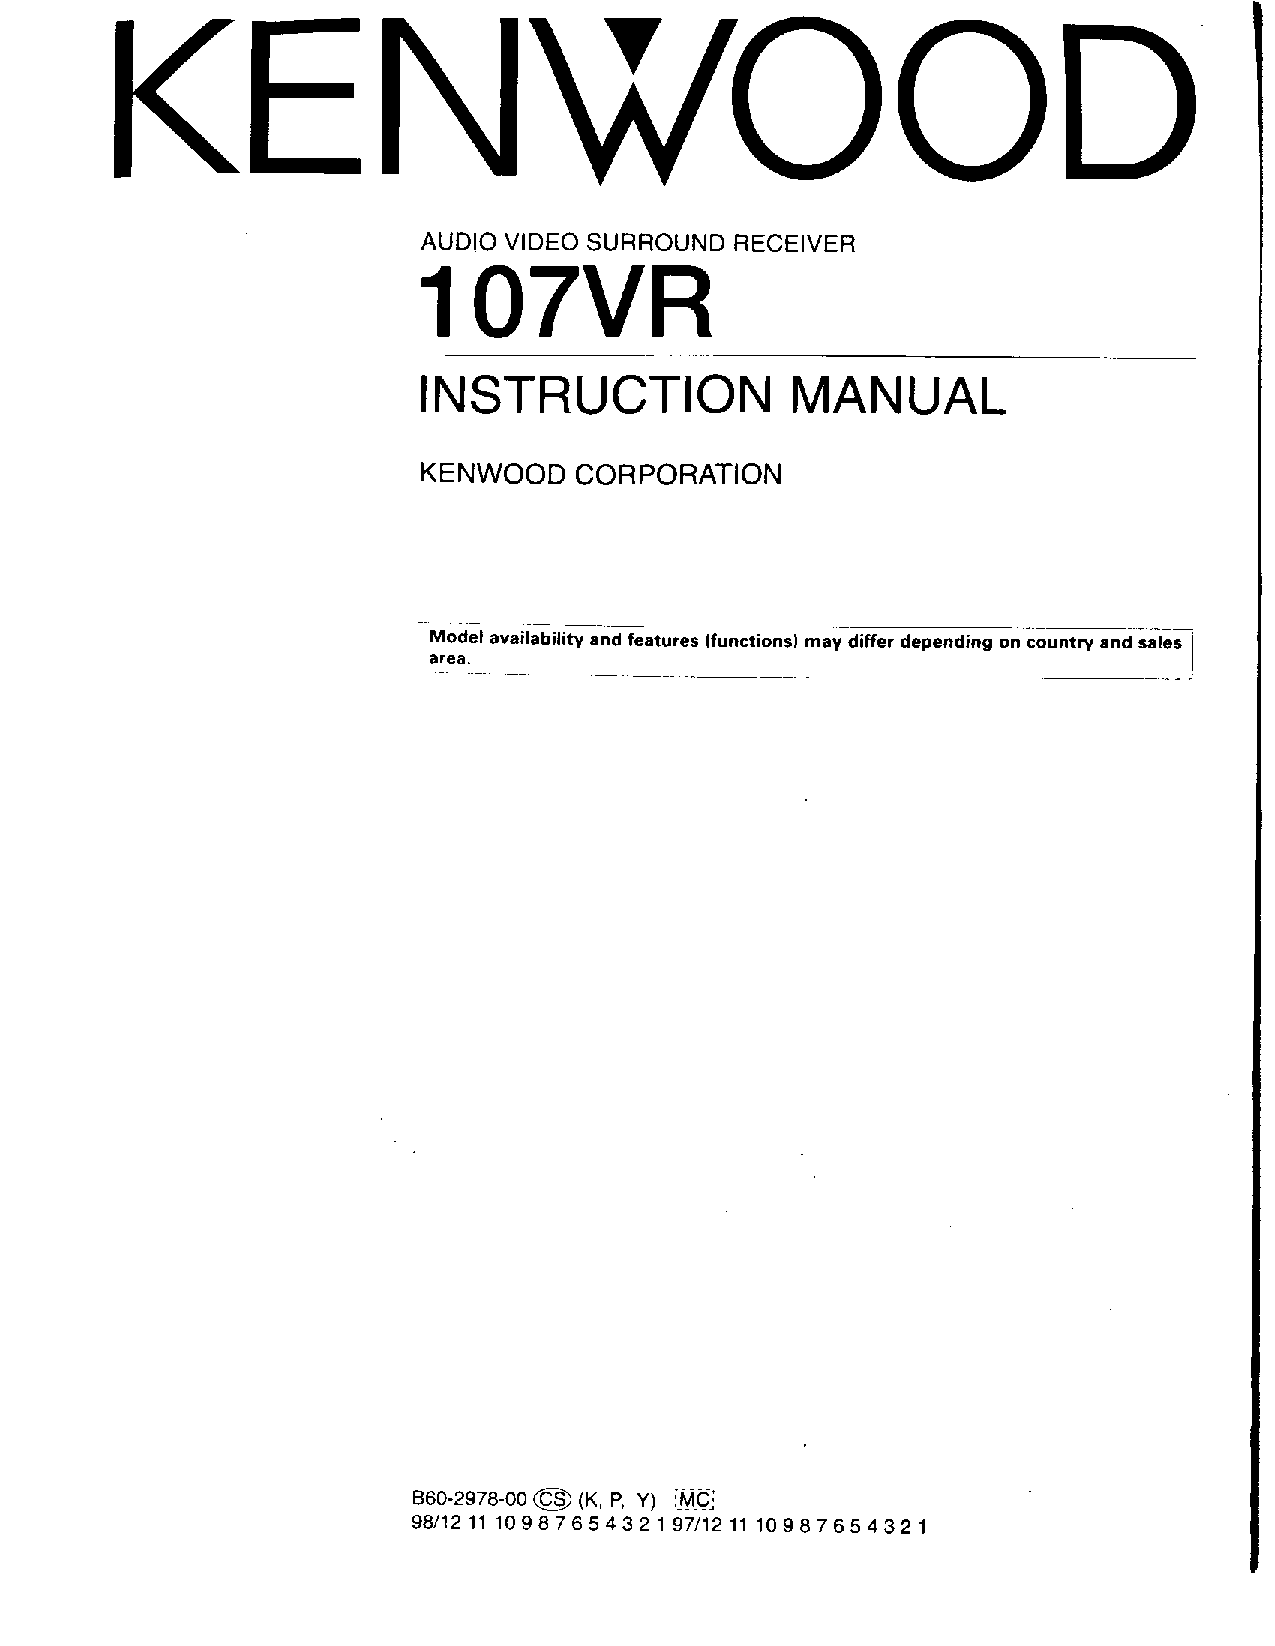 Kenwood 107VR Instruction Manual